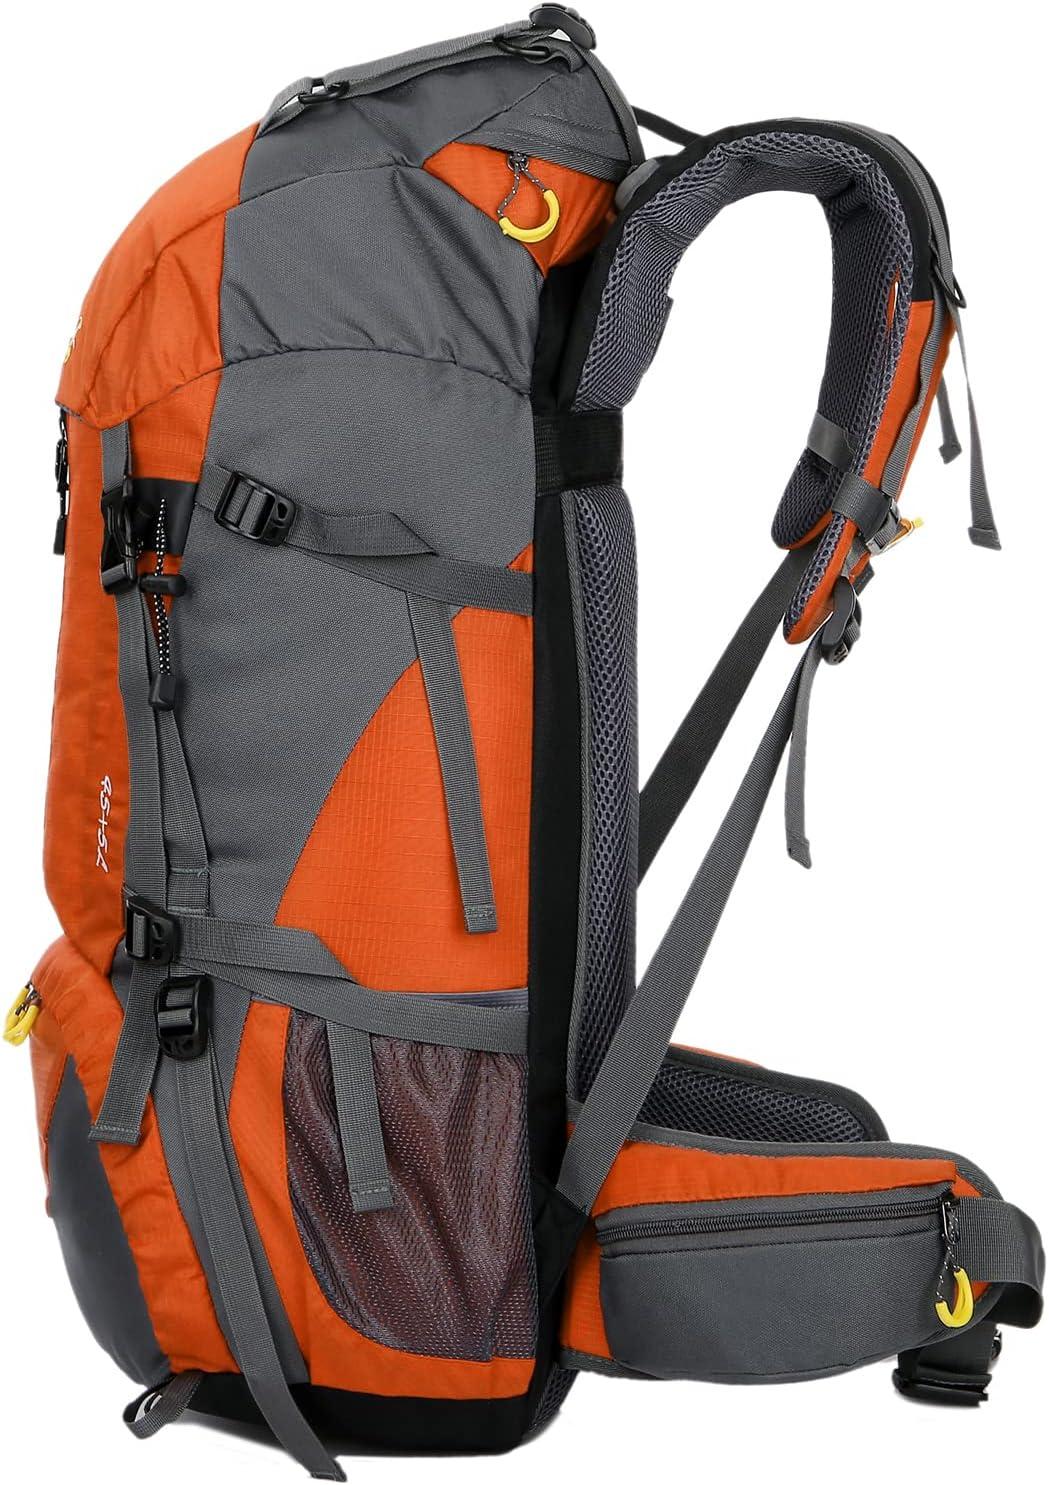 Esup 50L Hiking Backpack Men Camping Backpack with rain cover 45l+5l  Lightweight Backpacking Backpack Travel Backpack Orange